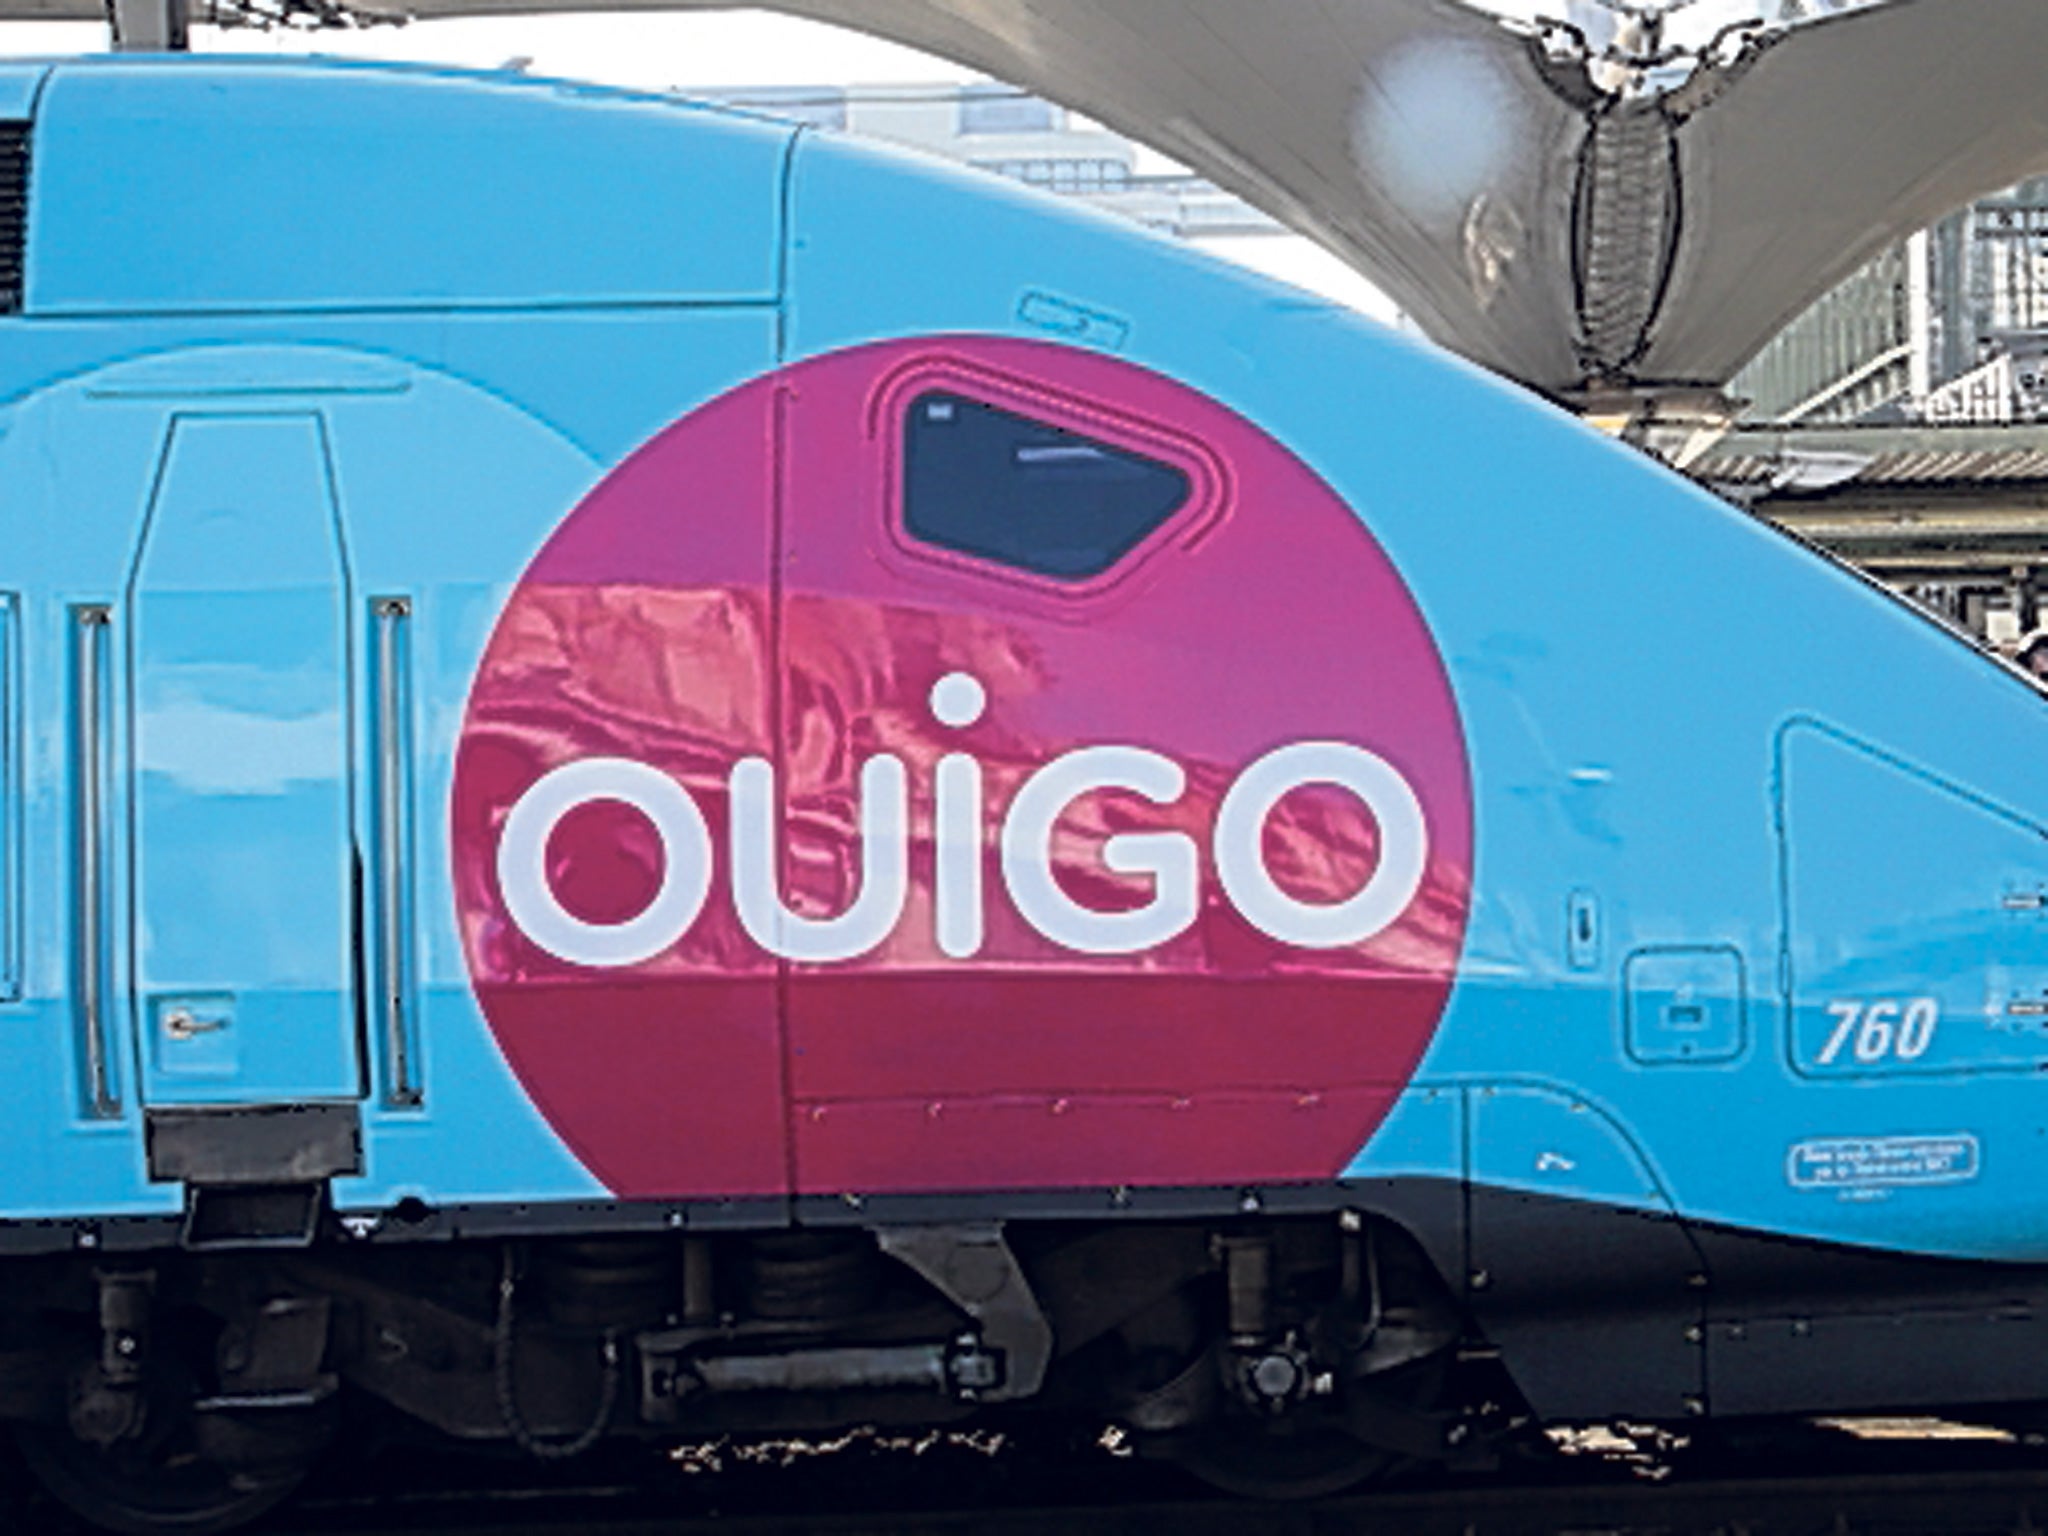 Sans frills: France's new low-cost rail service